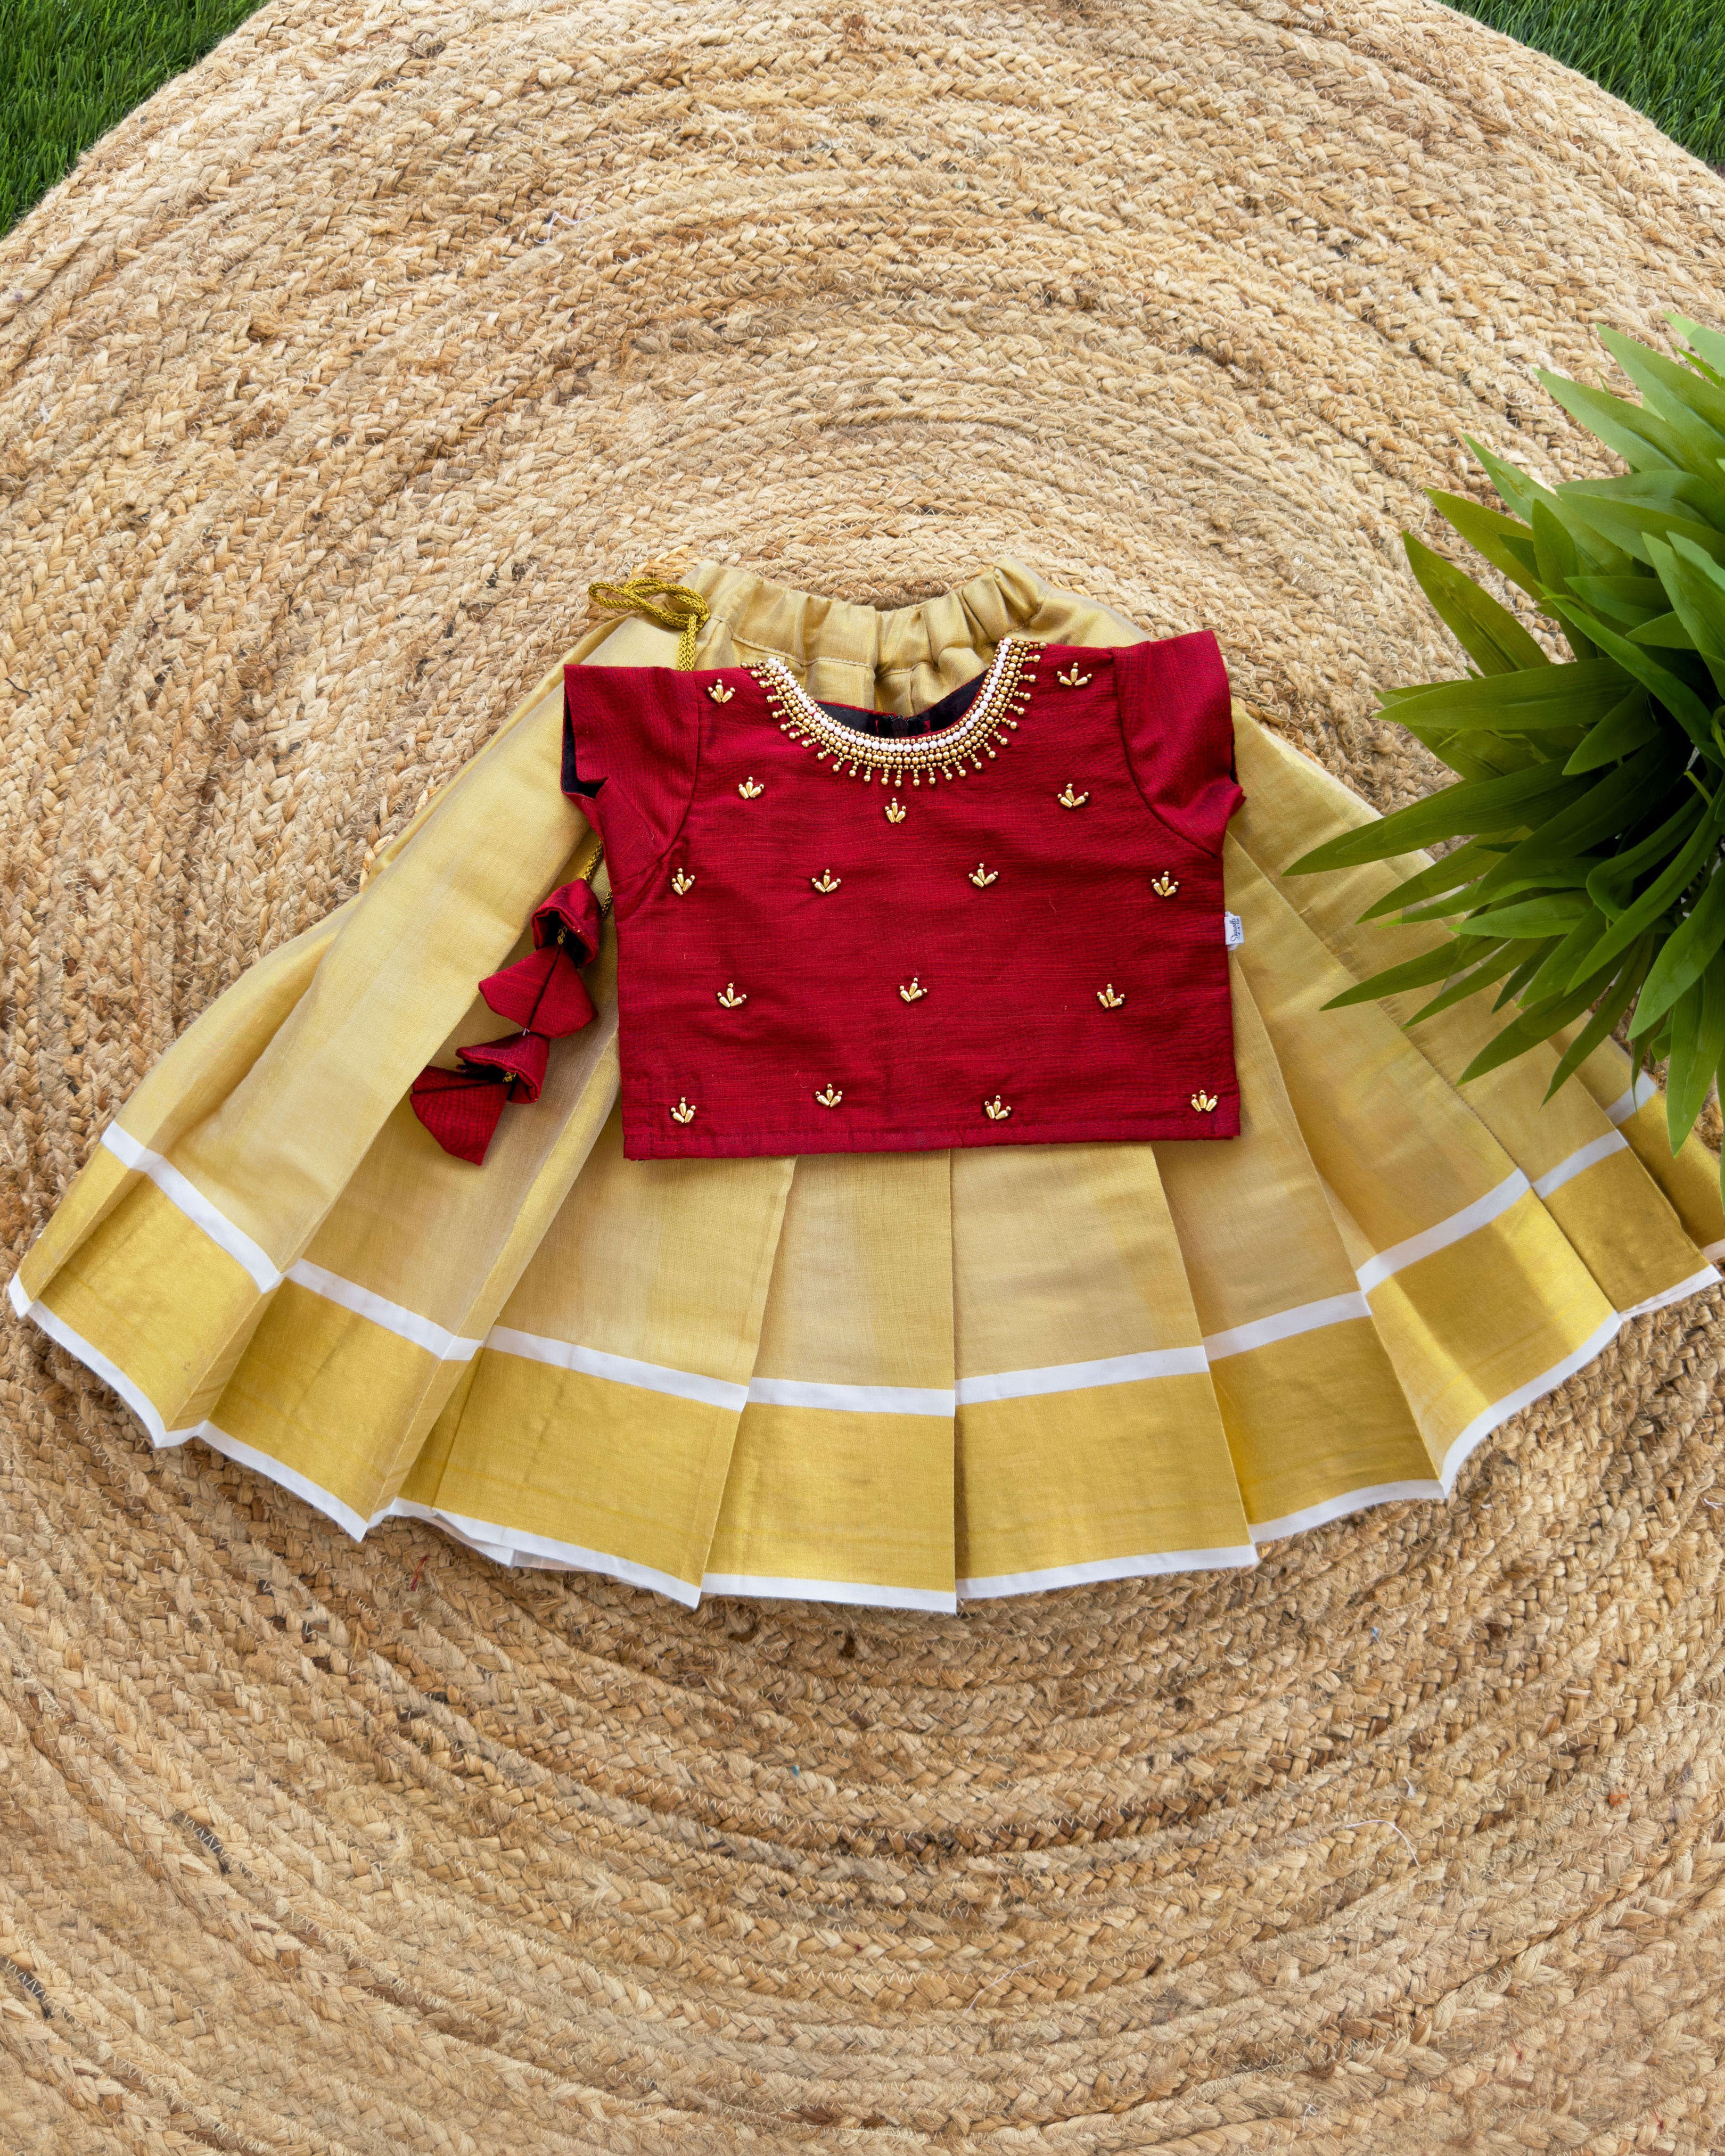 Kerala Cotton Dress – The Tangerine Road